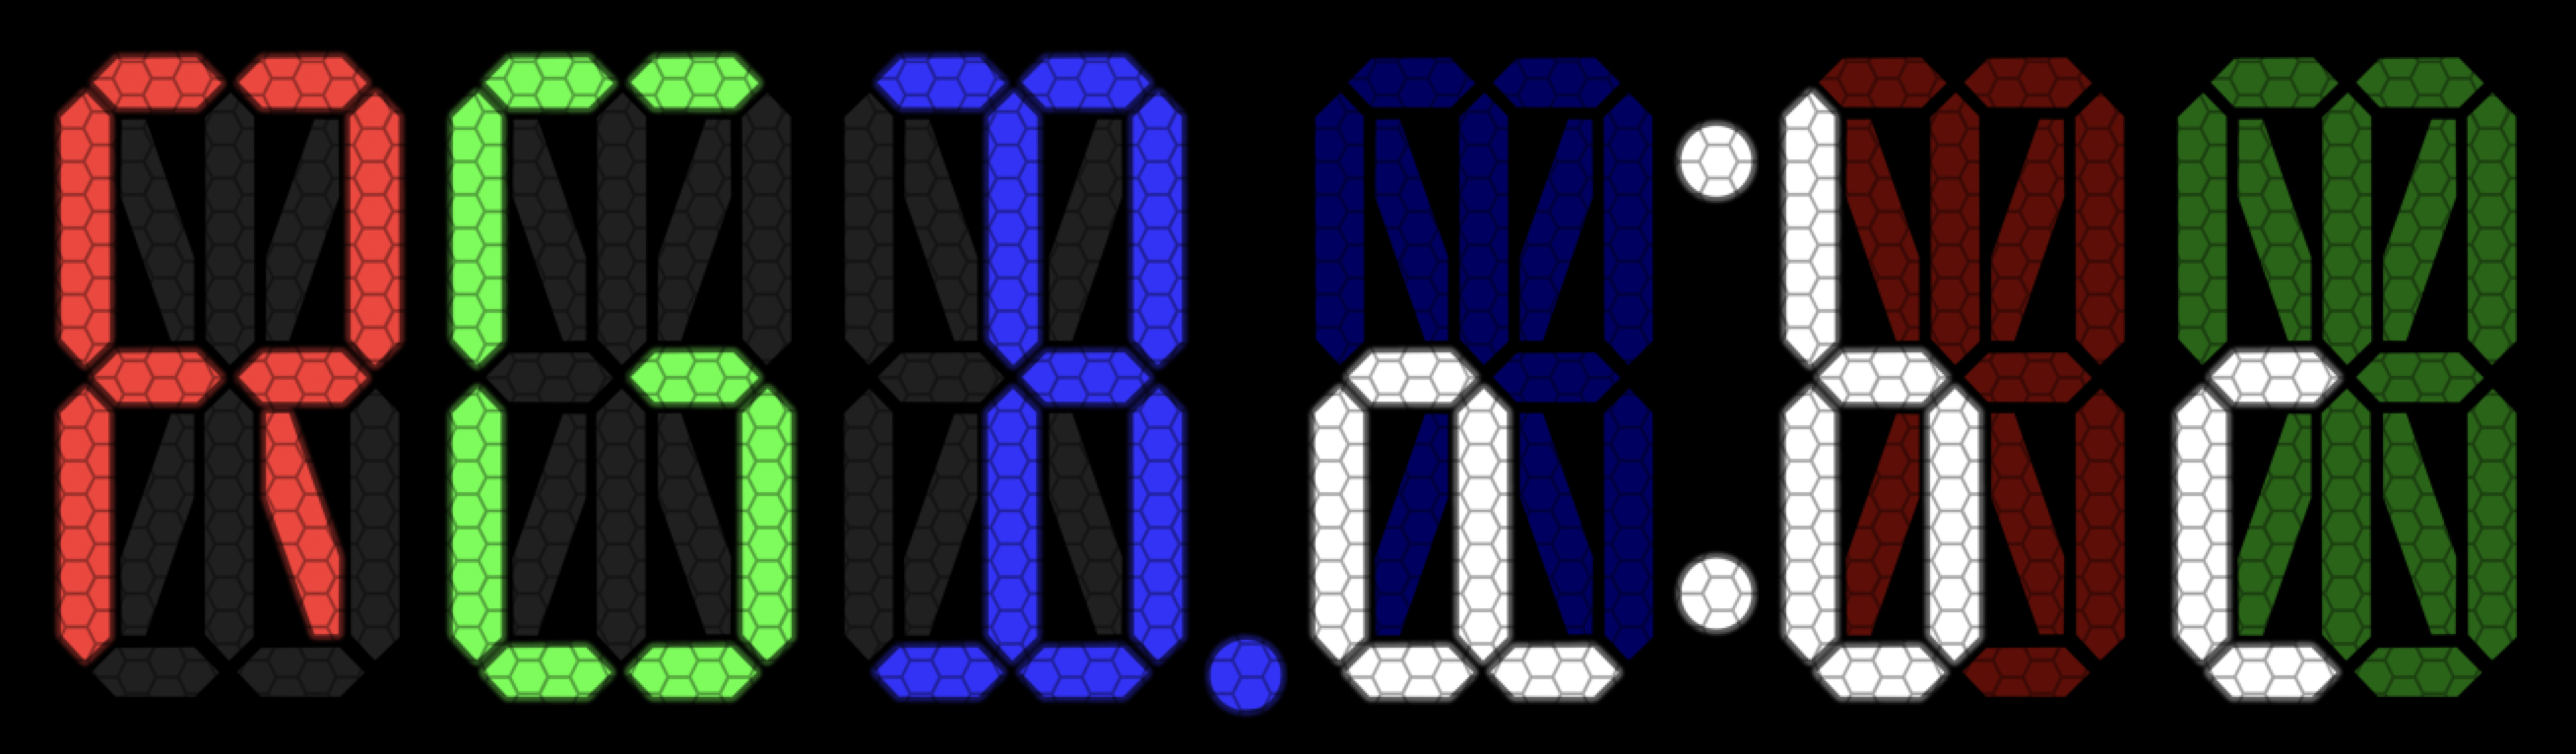 Example of 16-segment Display Color Customization